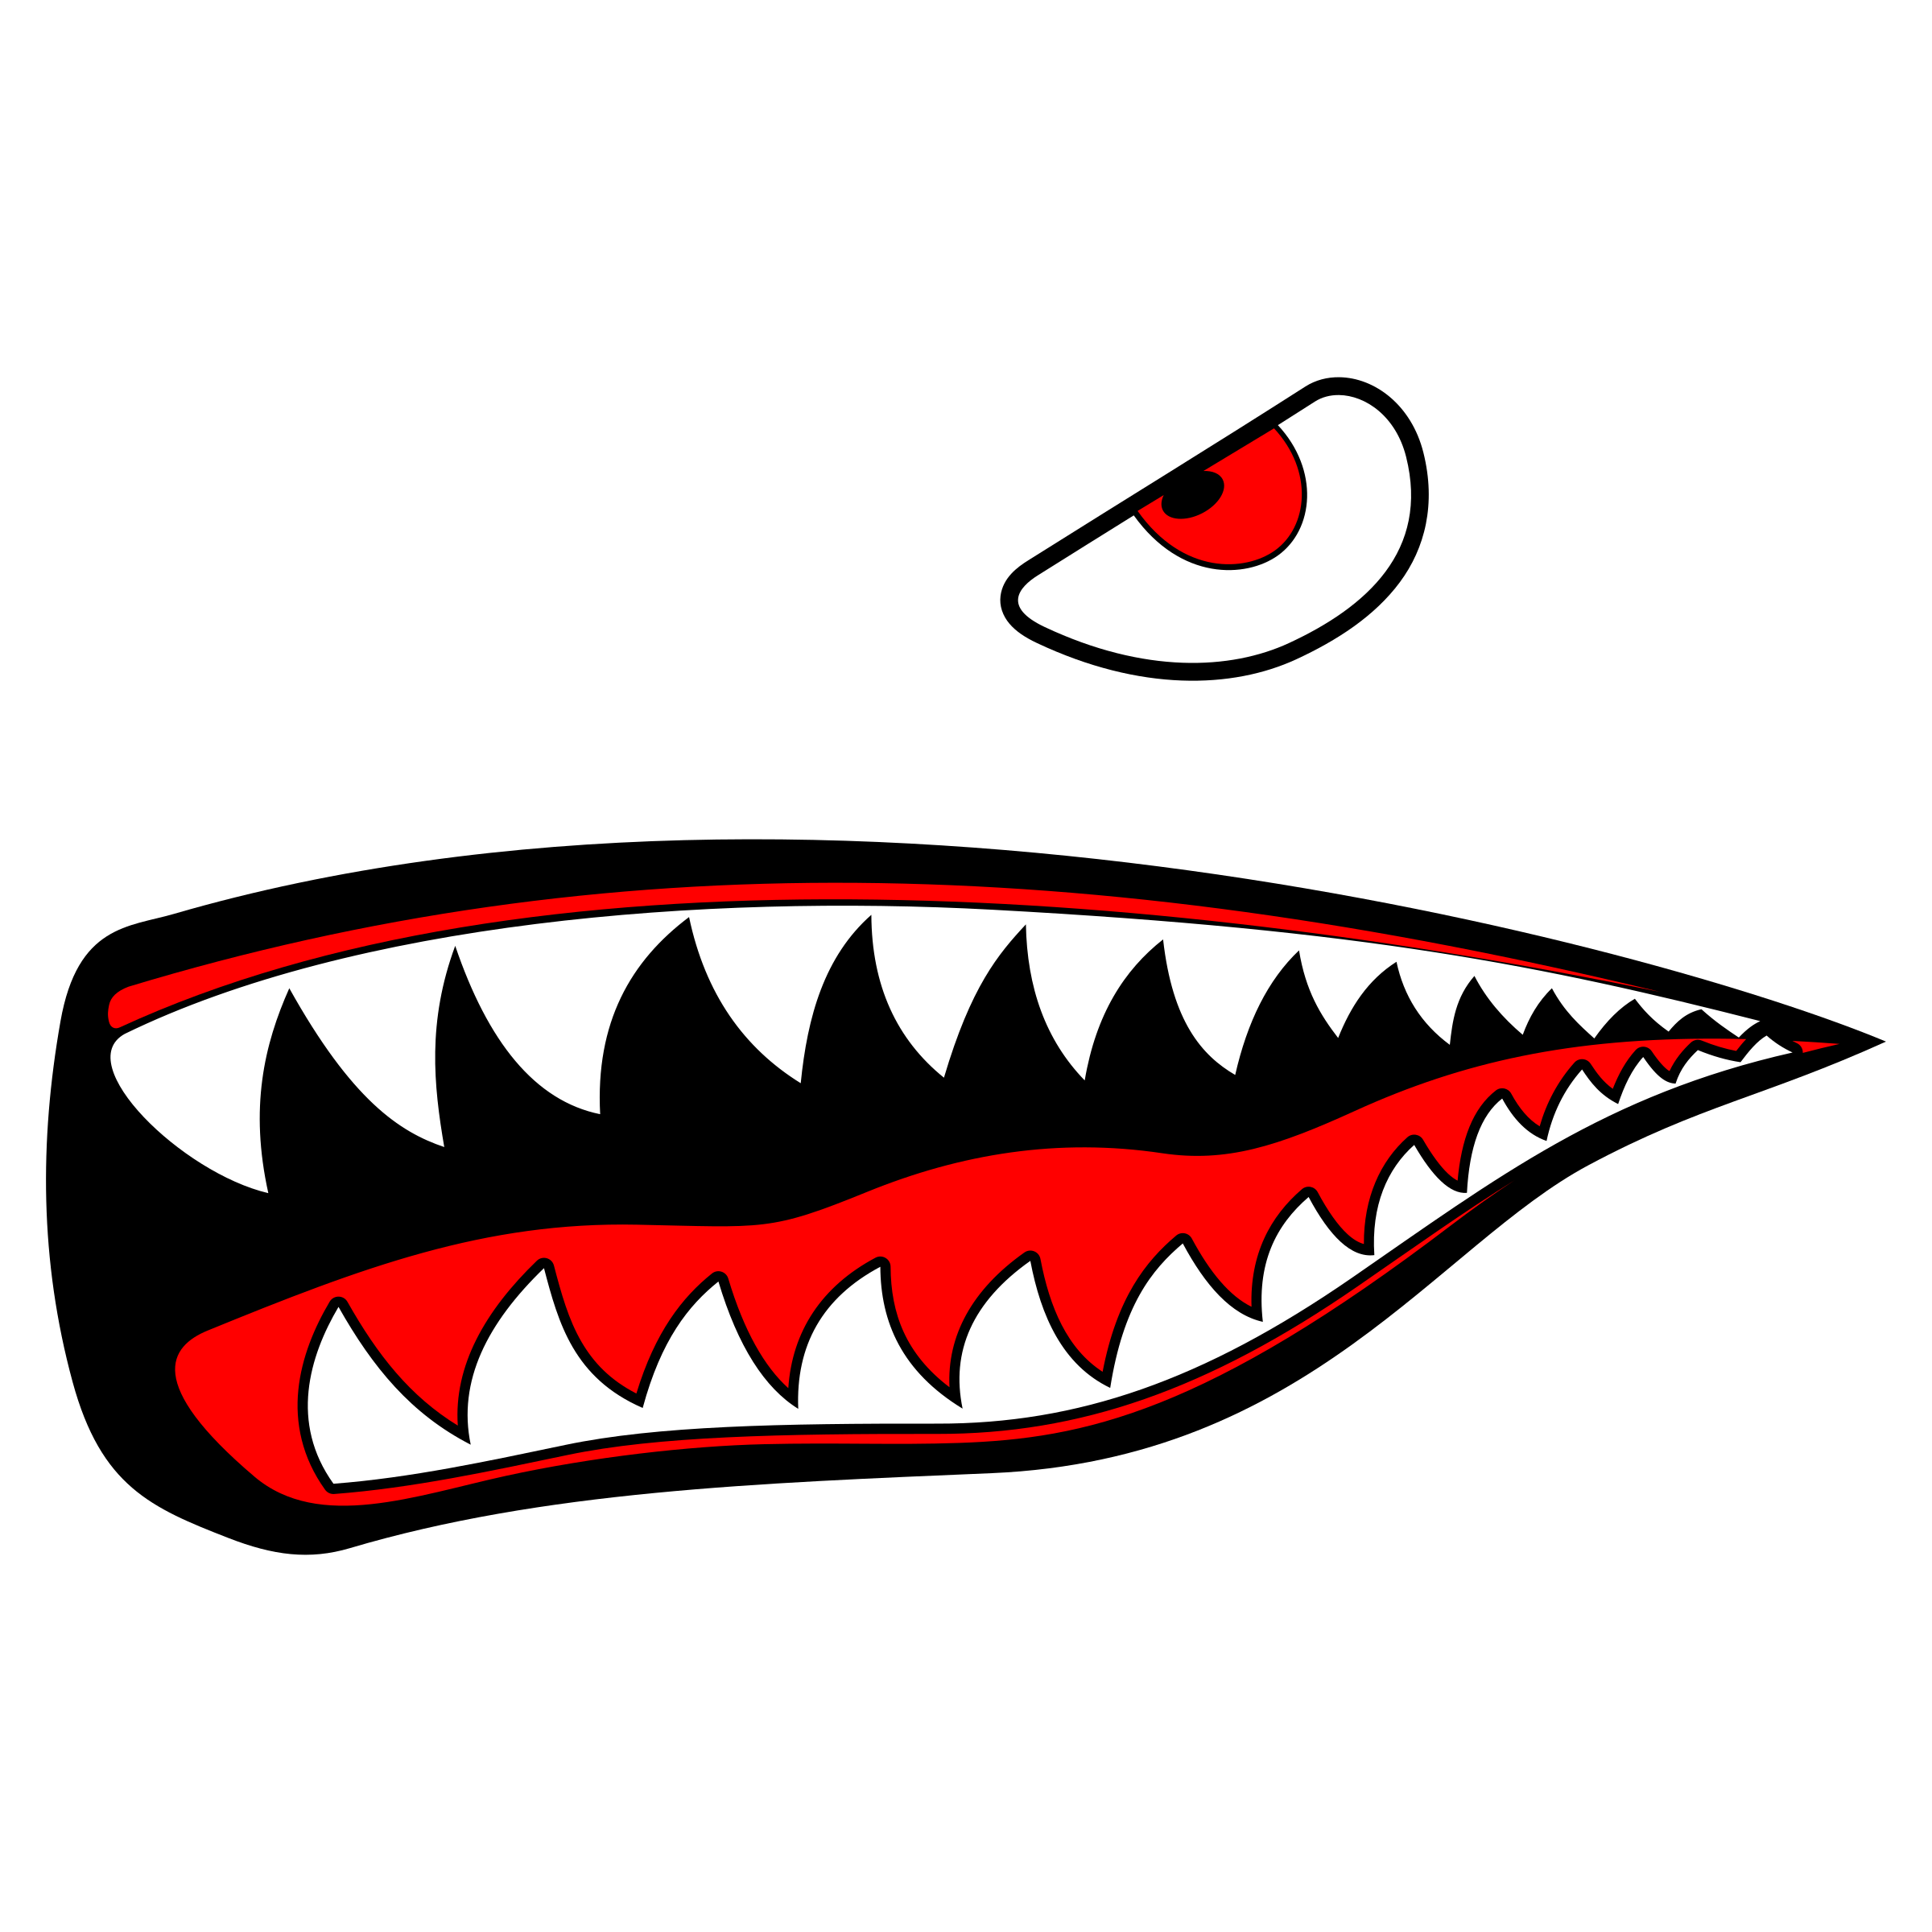 Shark Eye and teeth vector clipart image - Free stock photo - Public ...